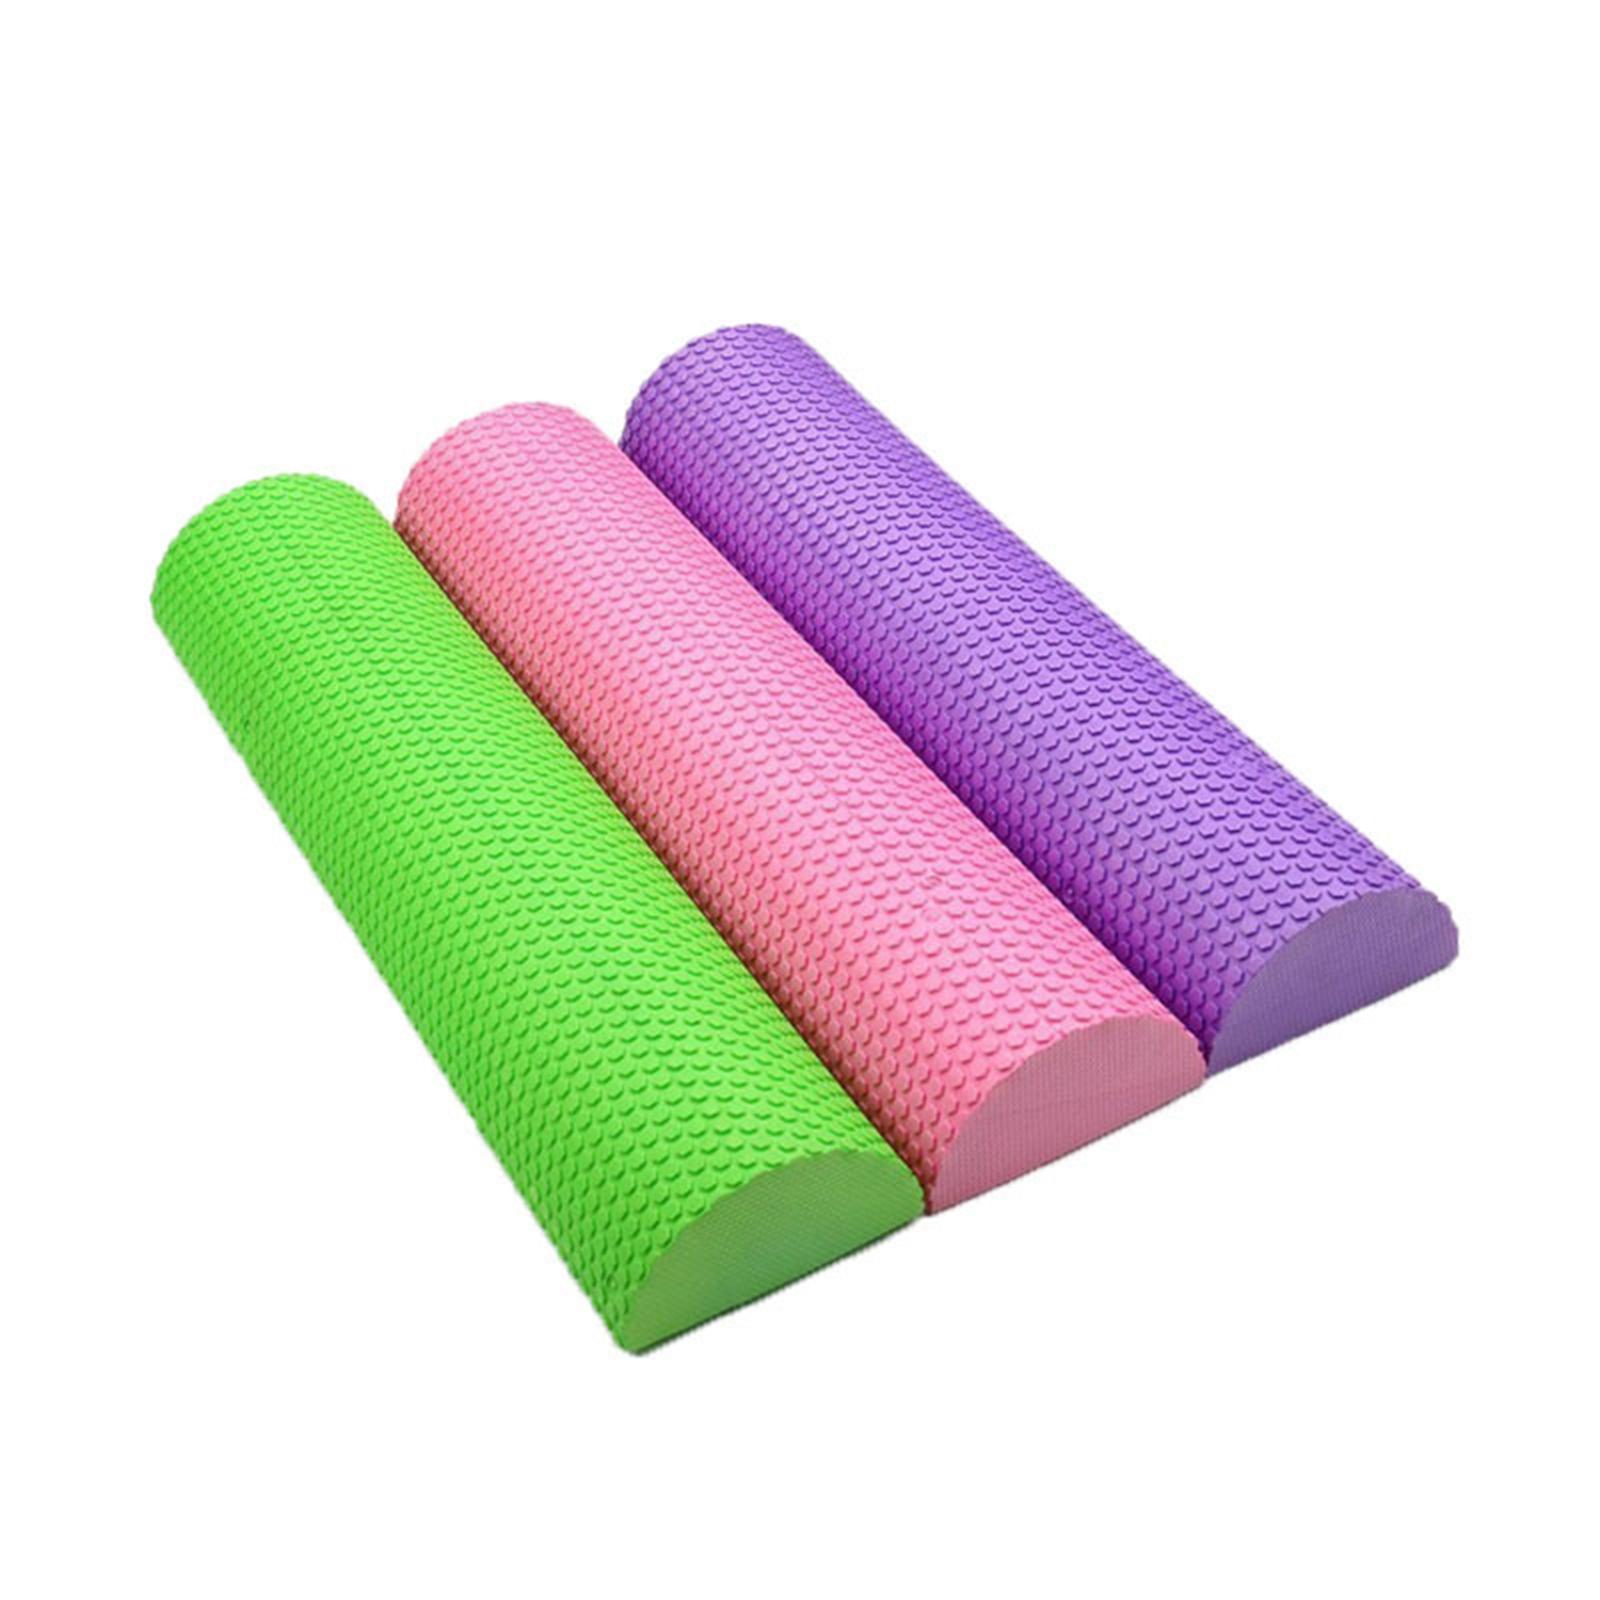 Foam Roller Half Round Massage Yoga Pilates Fitness Balance Yoga Green 30cm